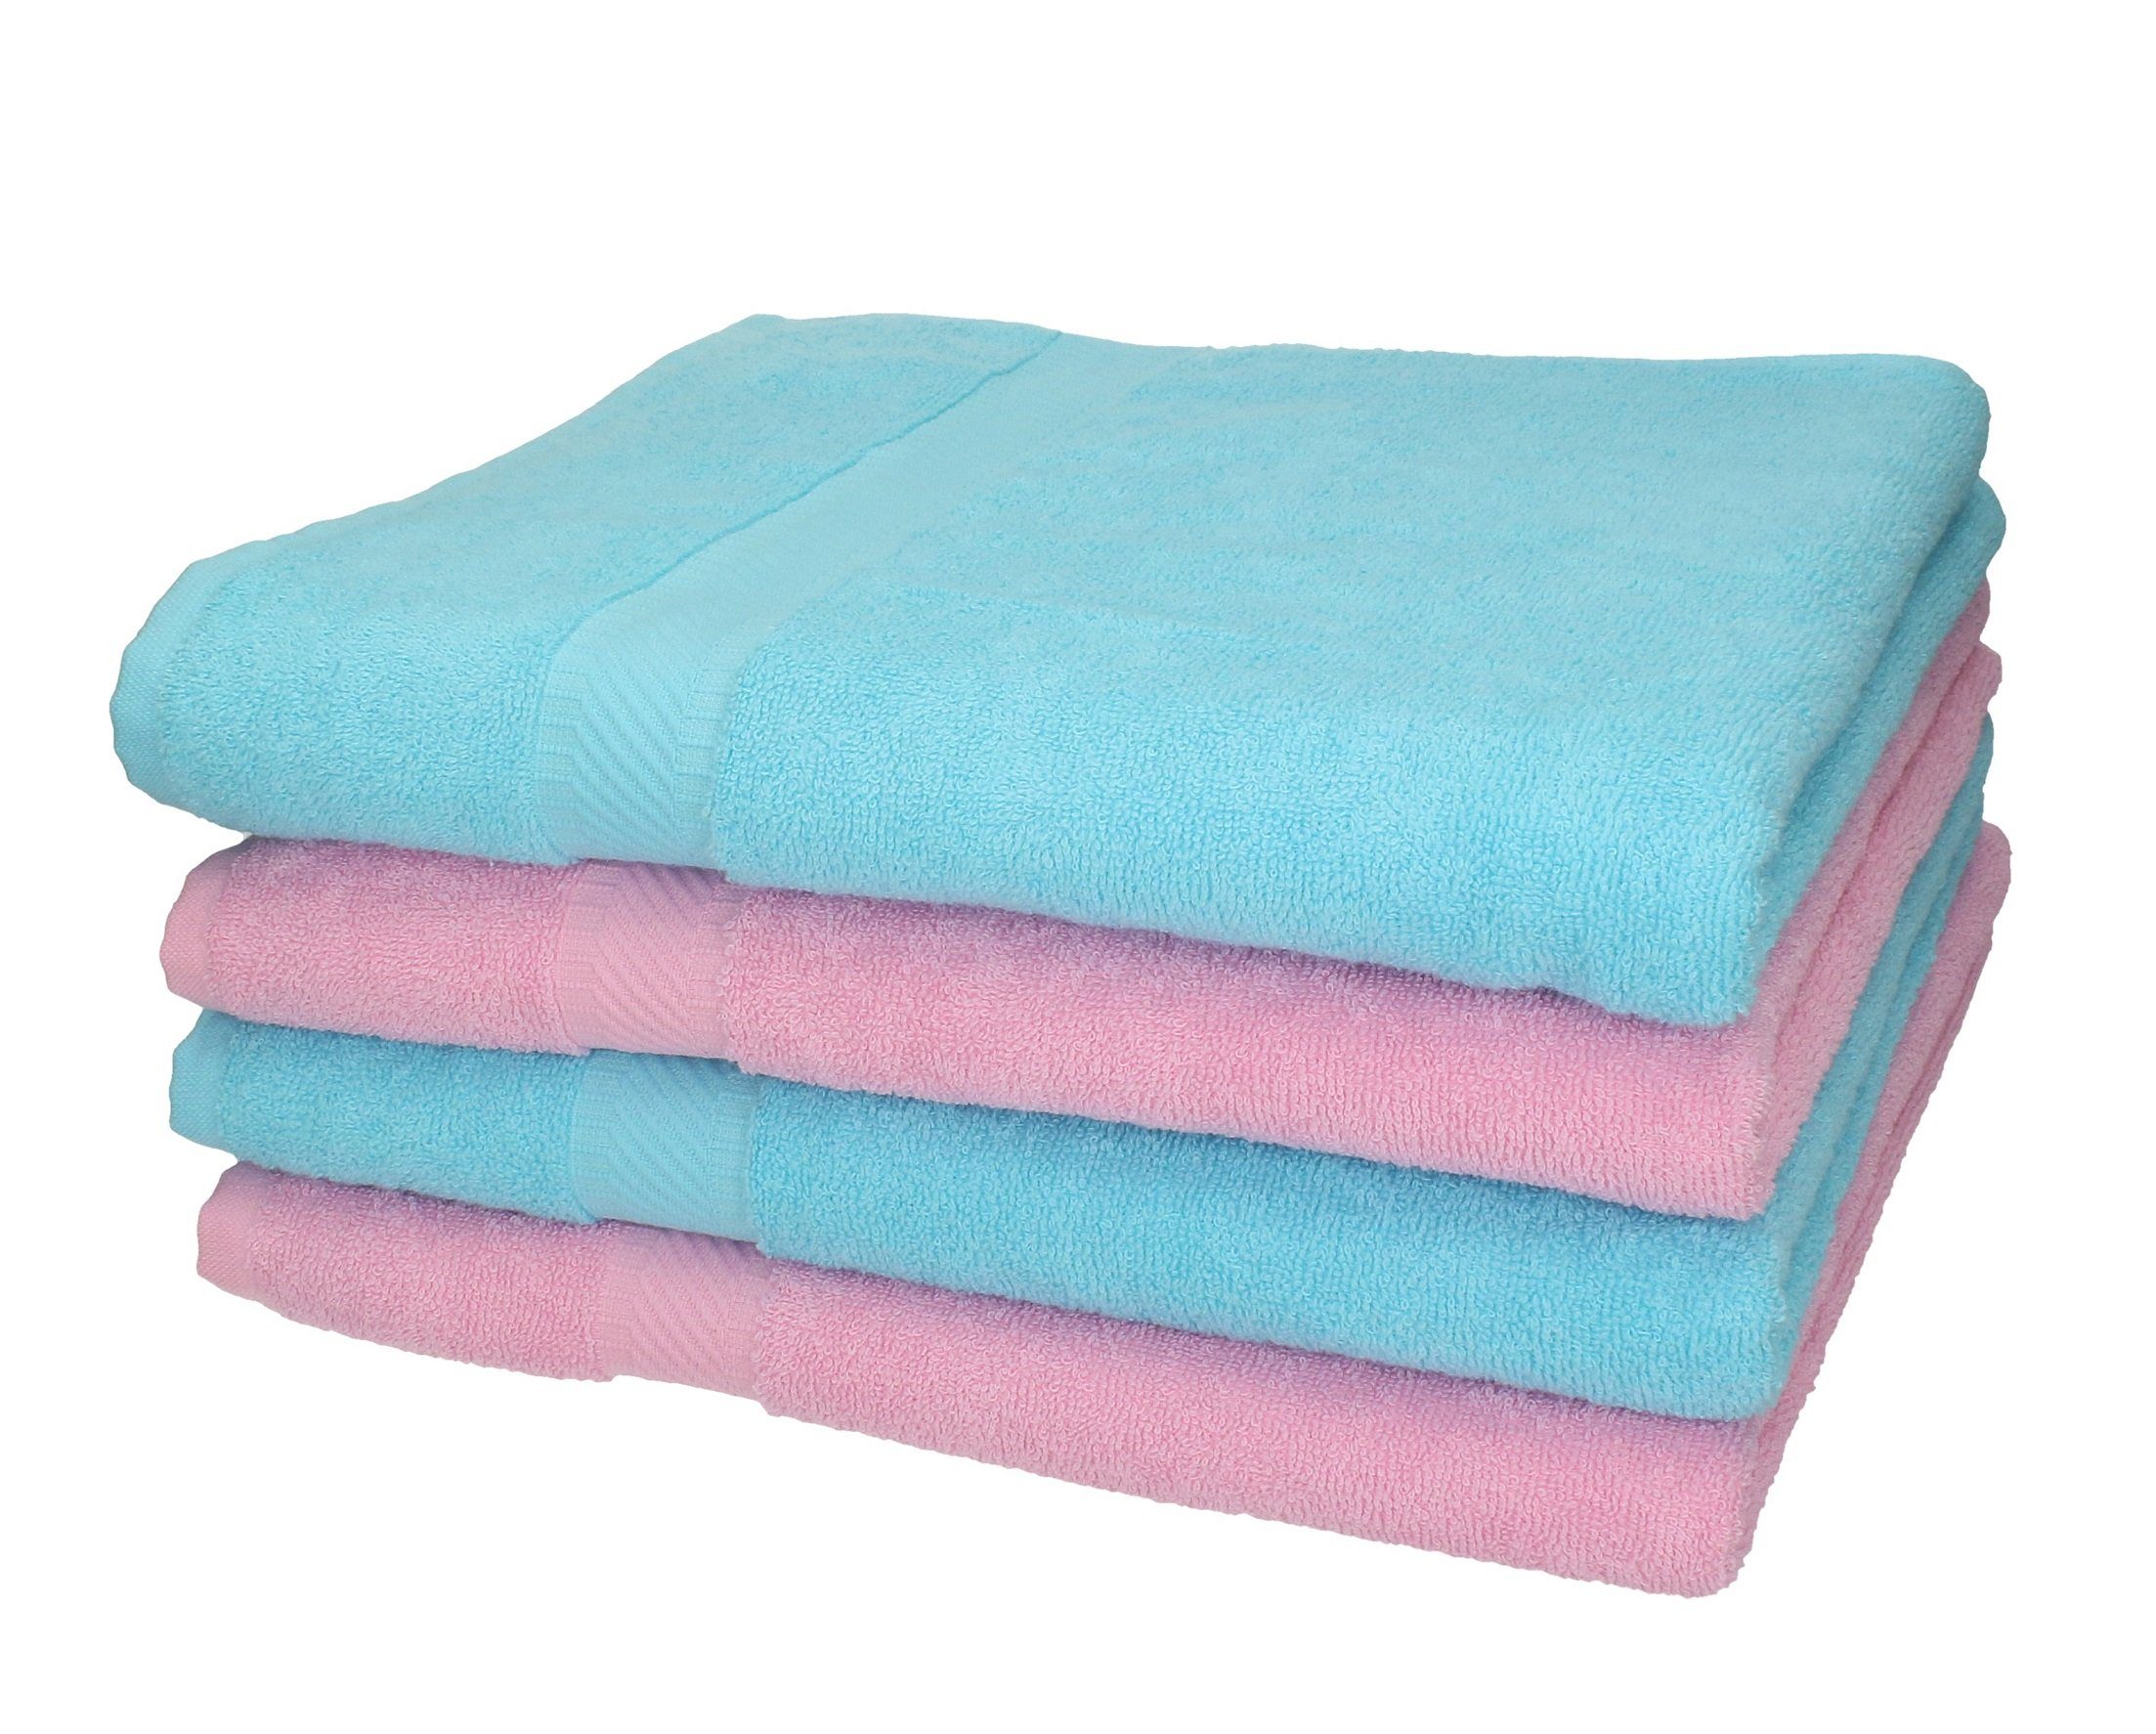 Betz Duschtücher 4 Stück Duschtücher Palermo 100% Baumwolle 70 x 140 cm rosé und türkis, 100% Baumwolle